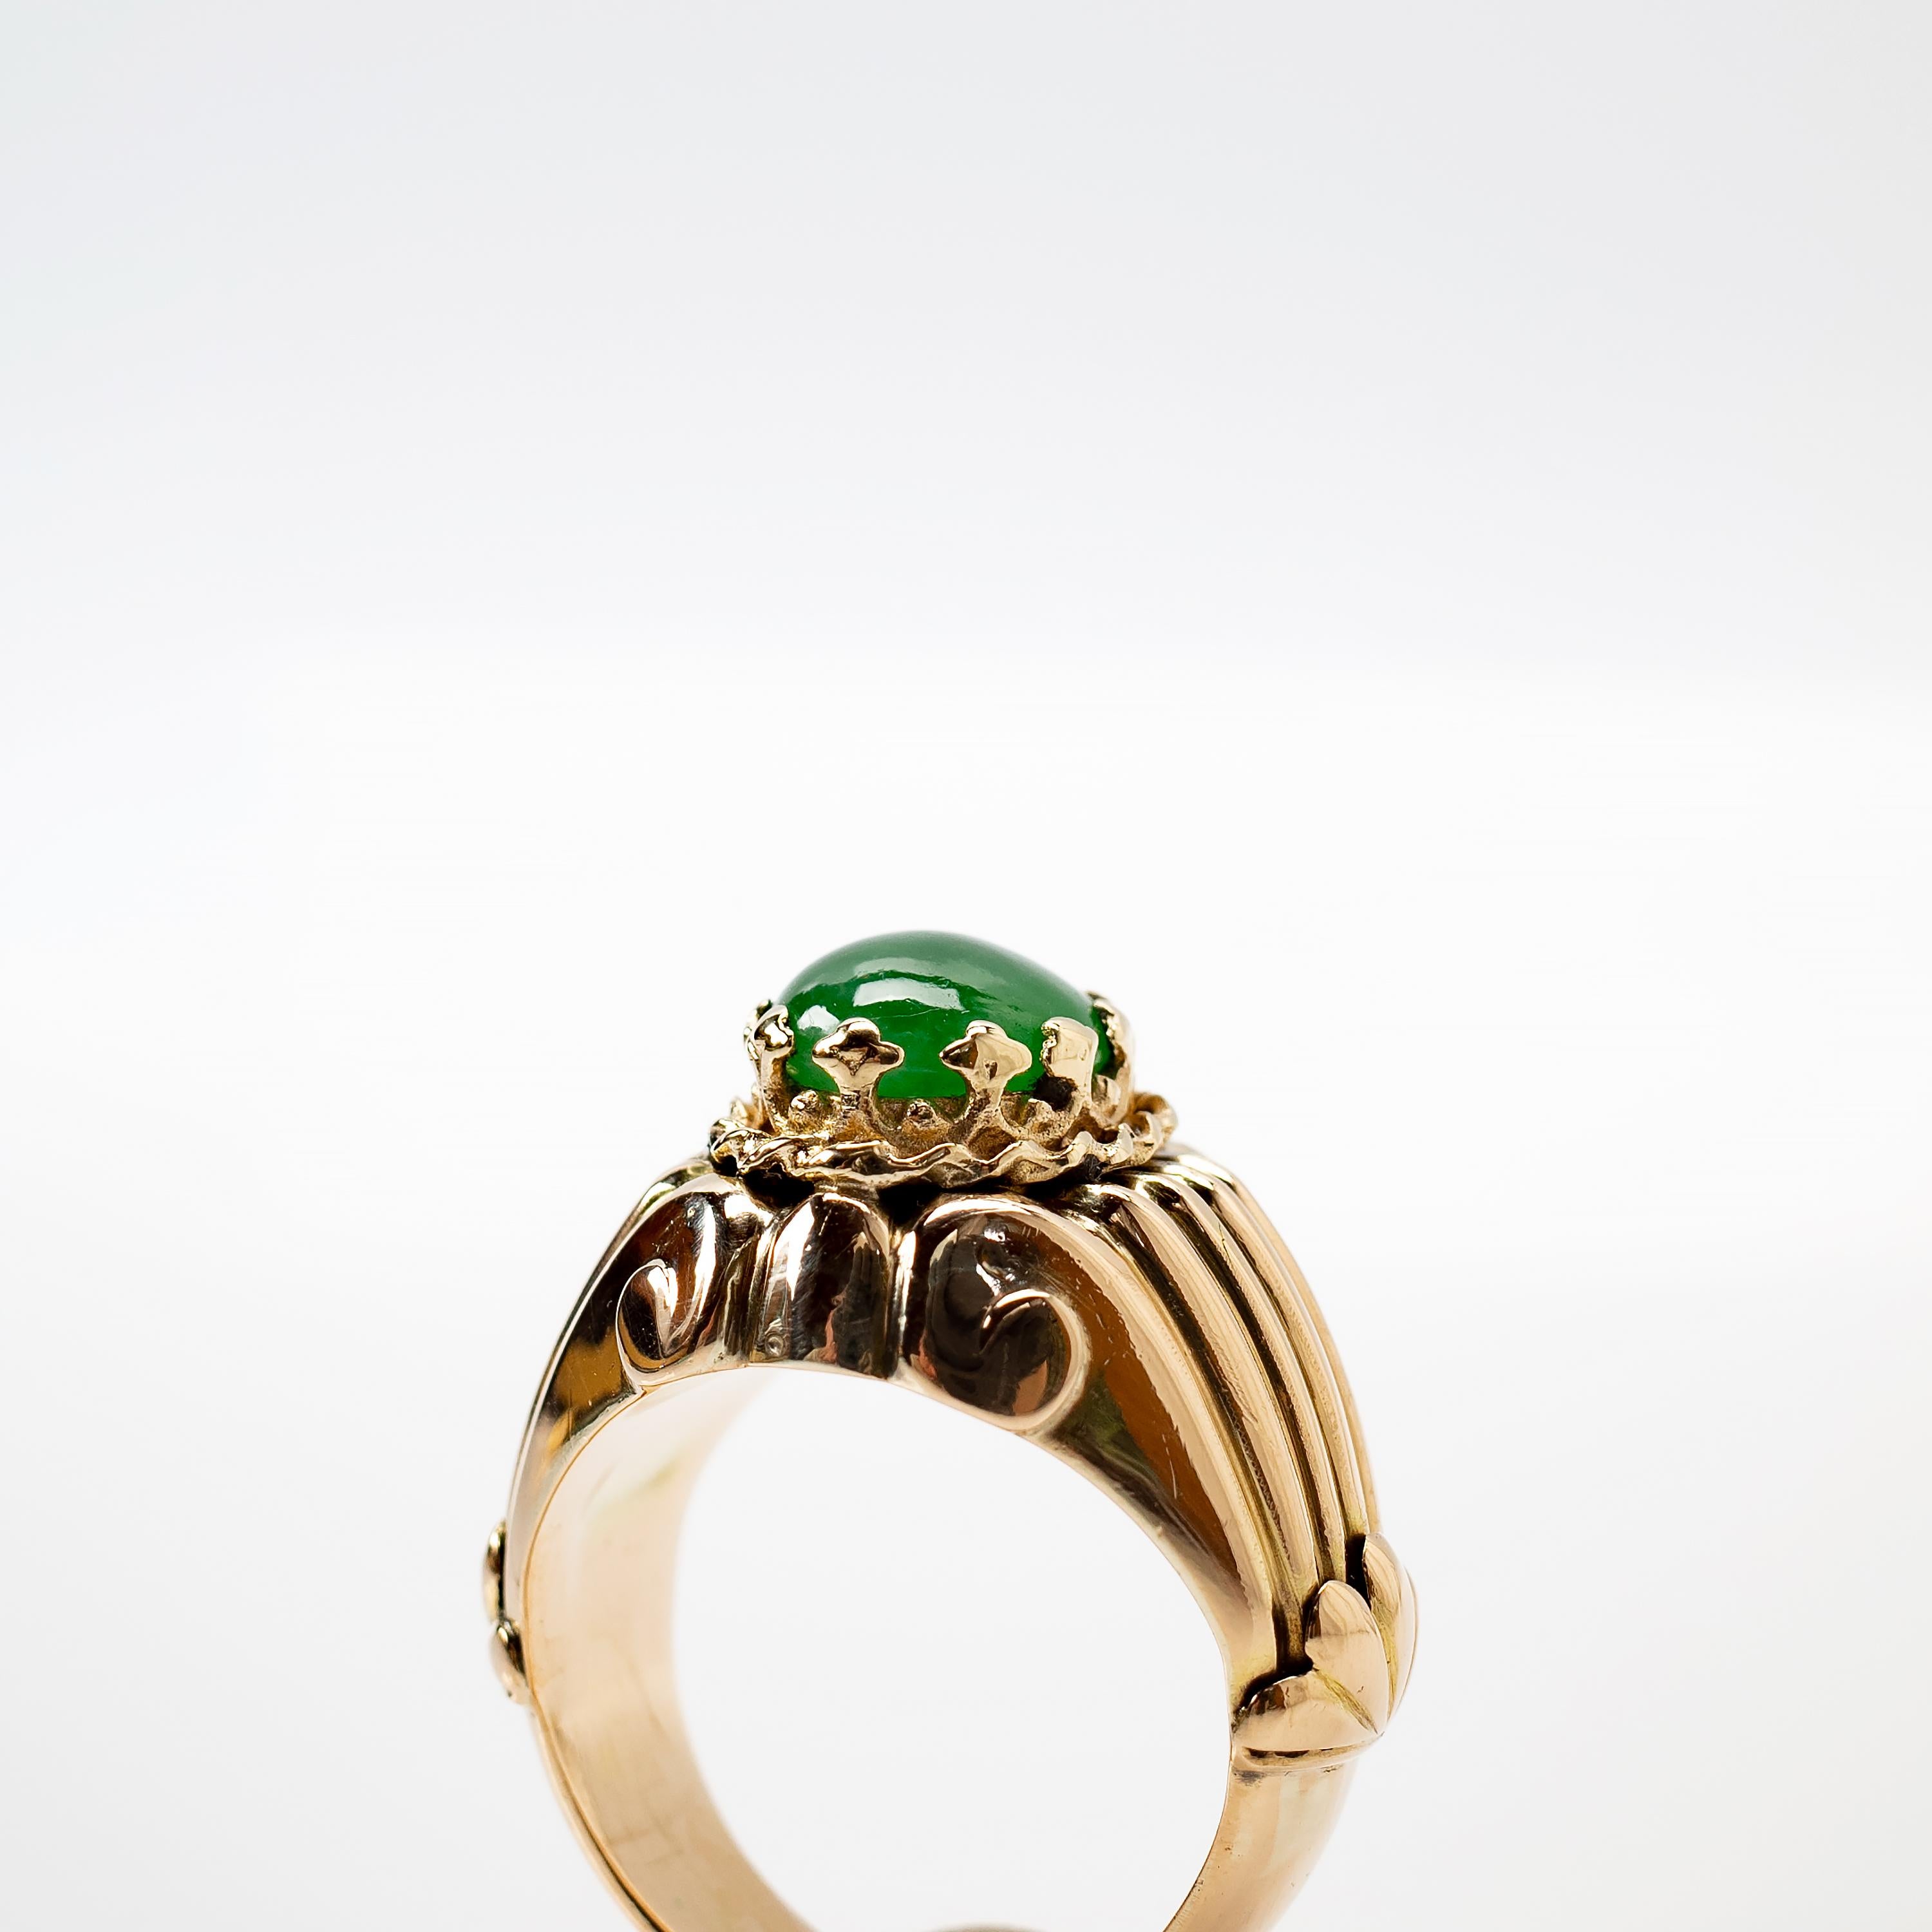 Retro Imperial Jade Ring in Regal Coronet Setting 